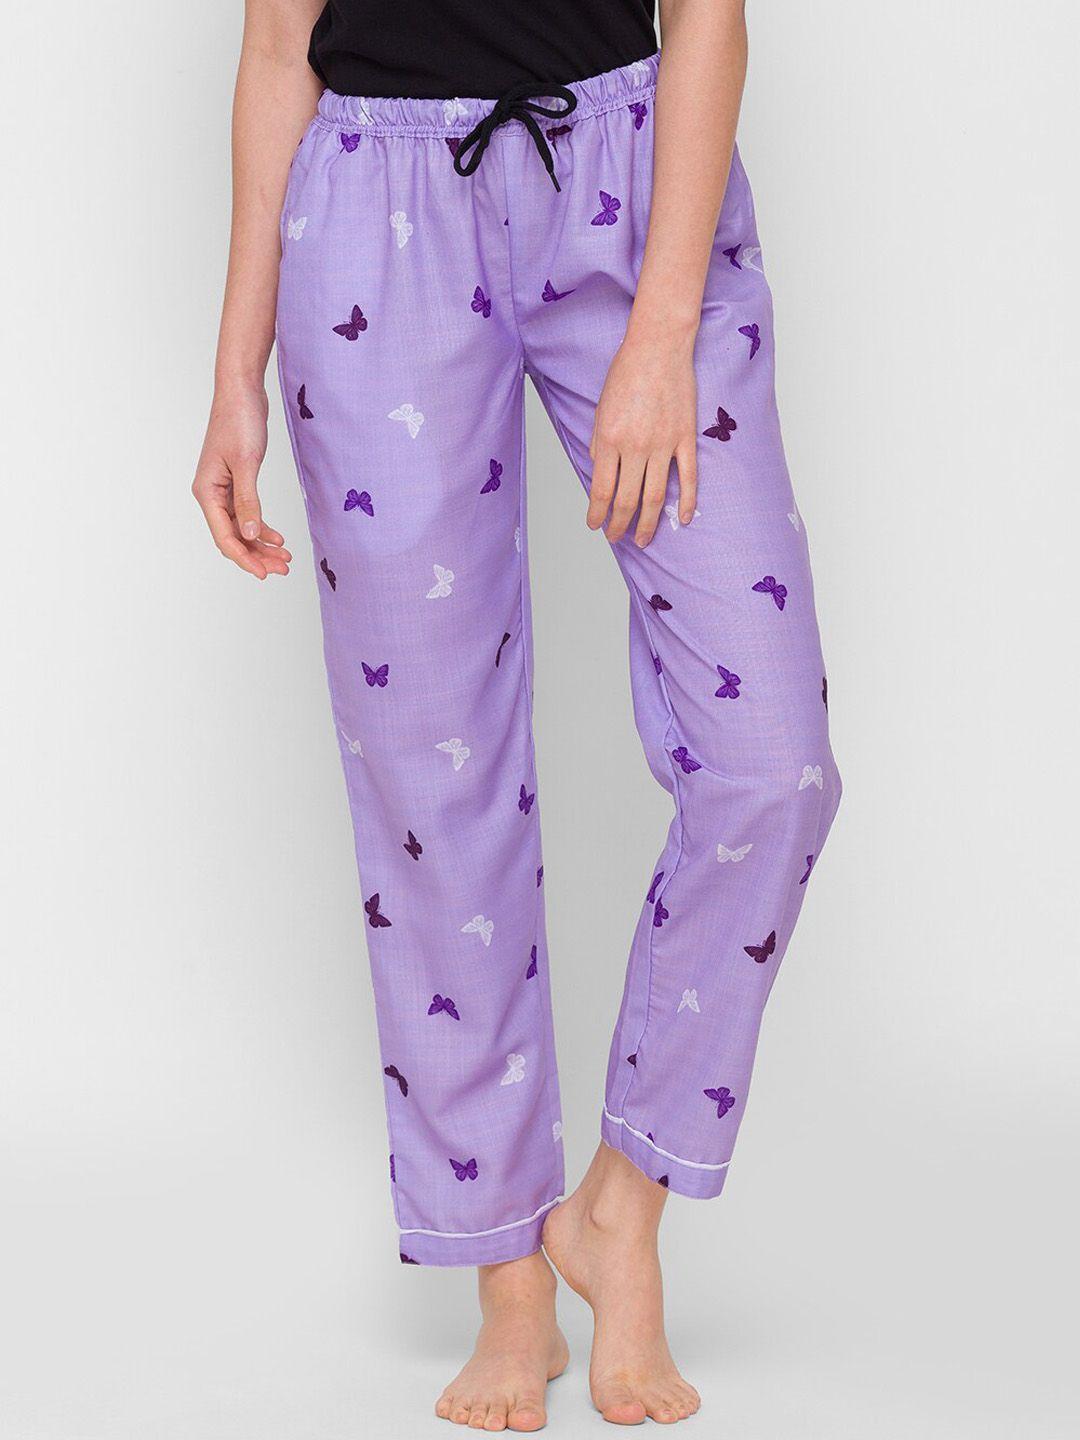 fashionrack women purple printed cotton lounge pants